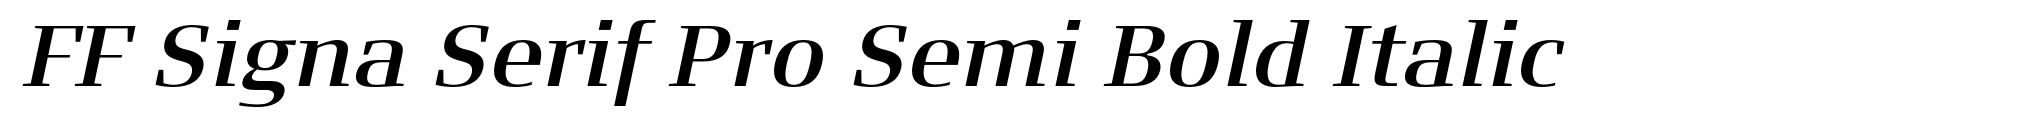 FF Signa Serif Pro Semi Bold Italic image